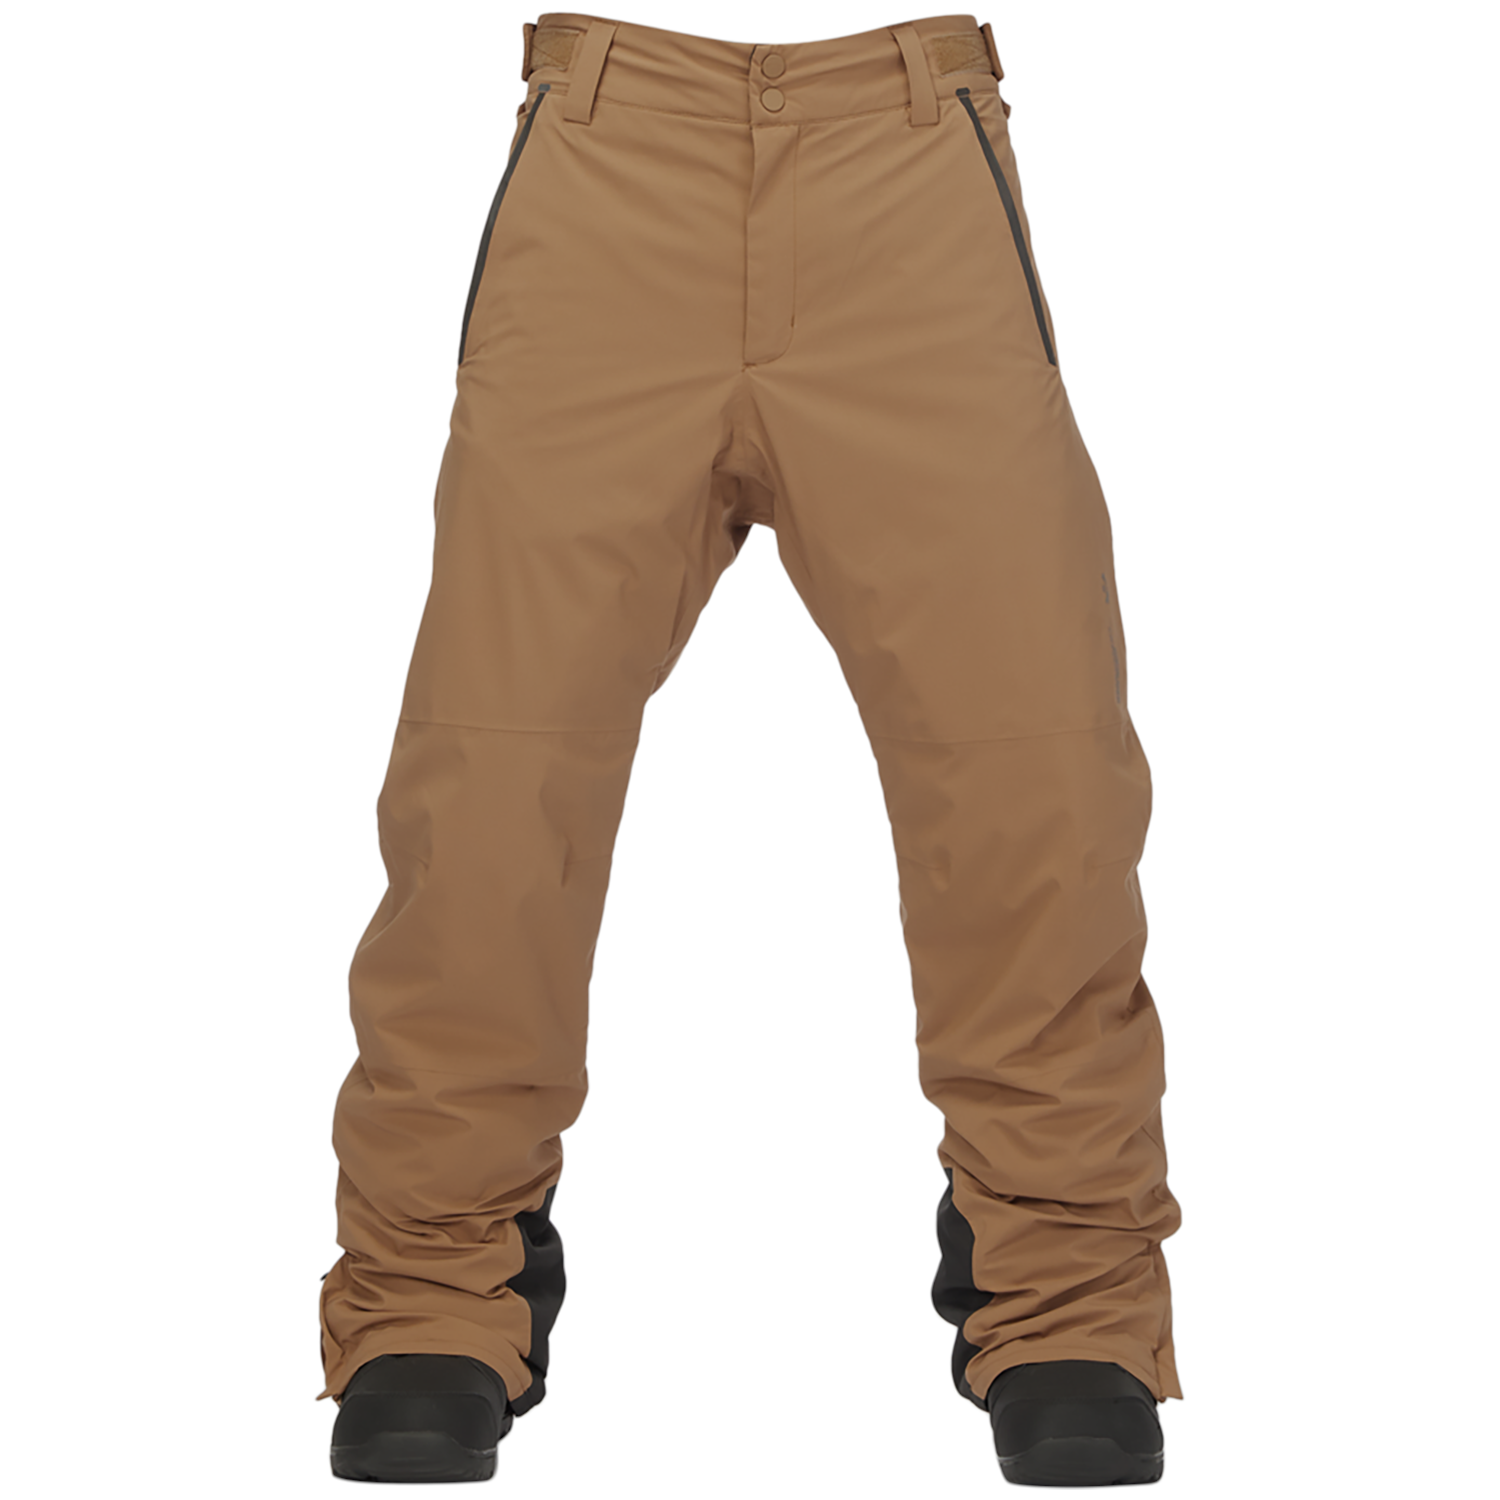 Billabong Compass Pant - Ski trousers Men's, Buy online